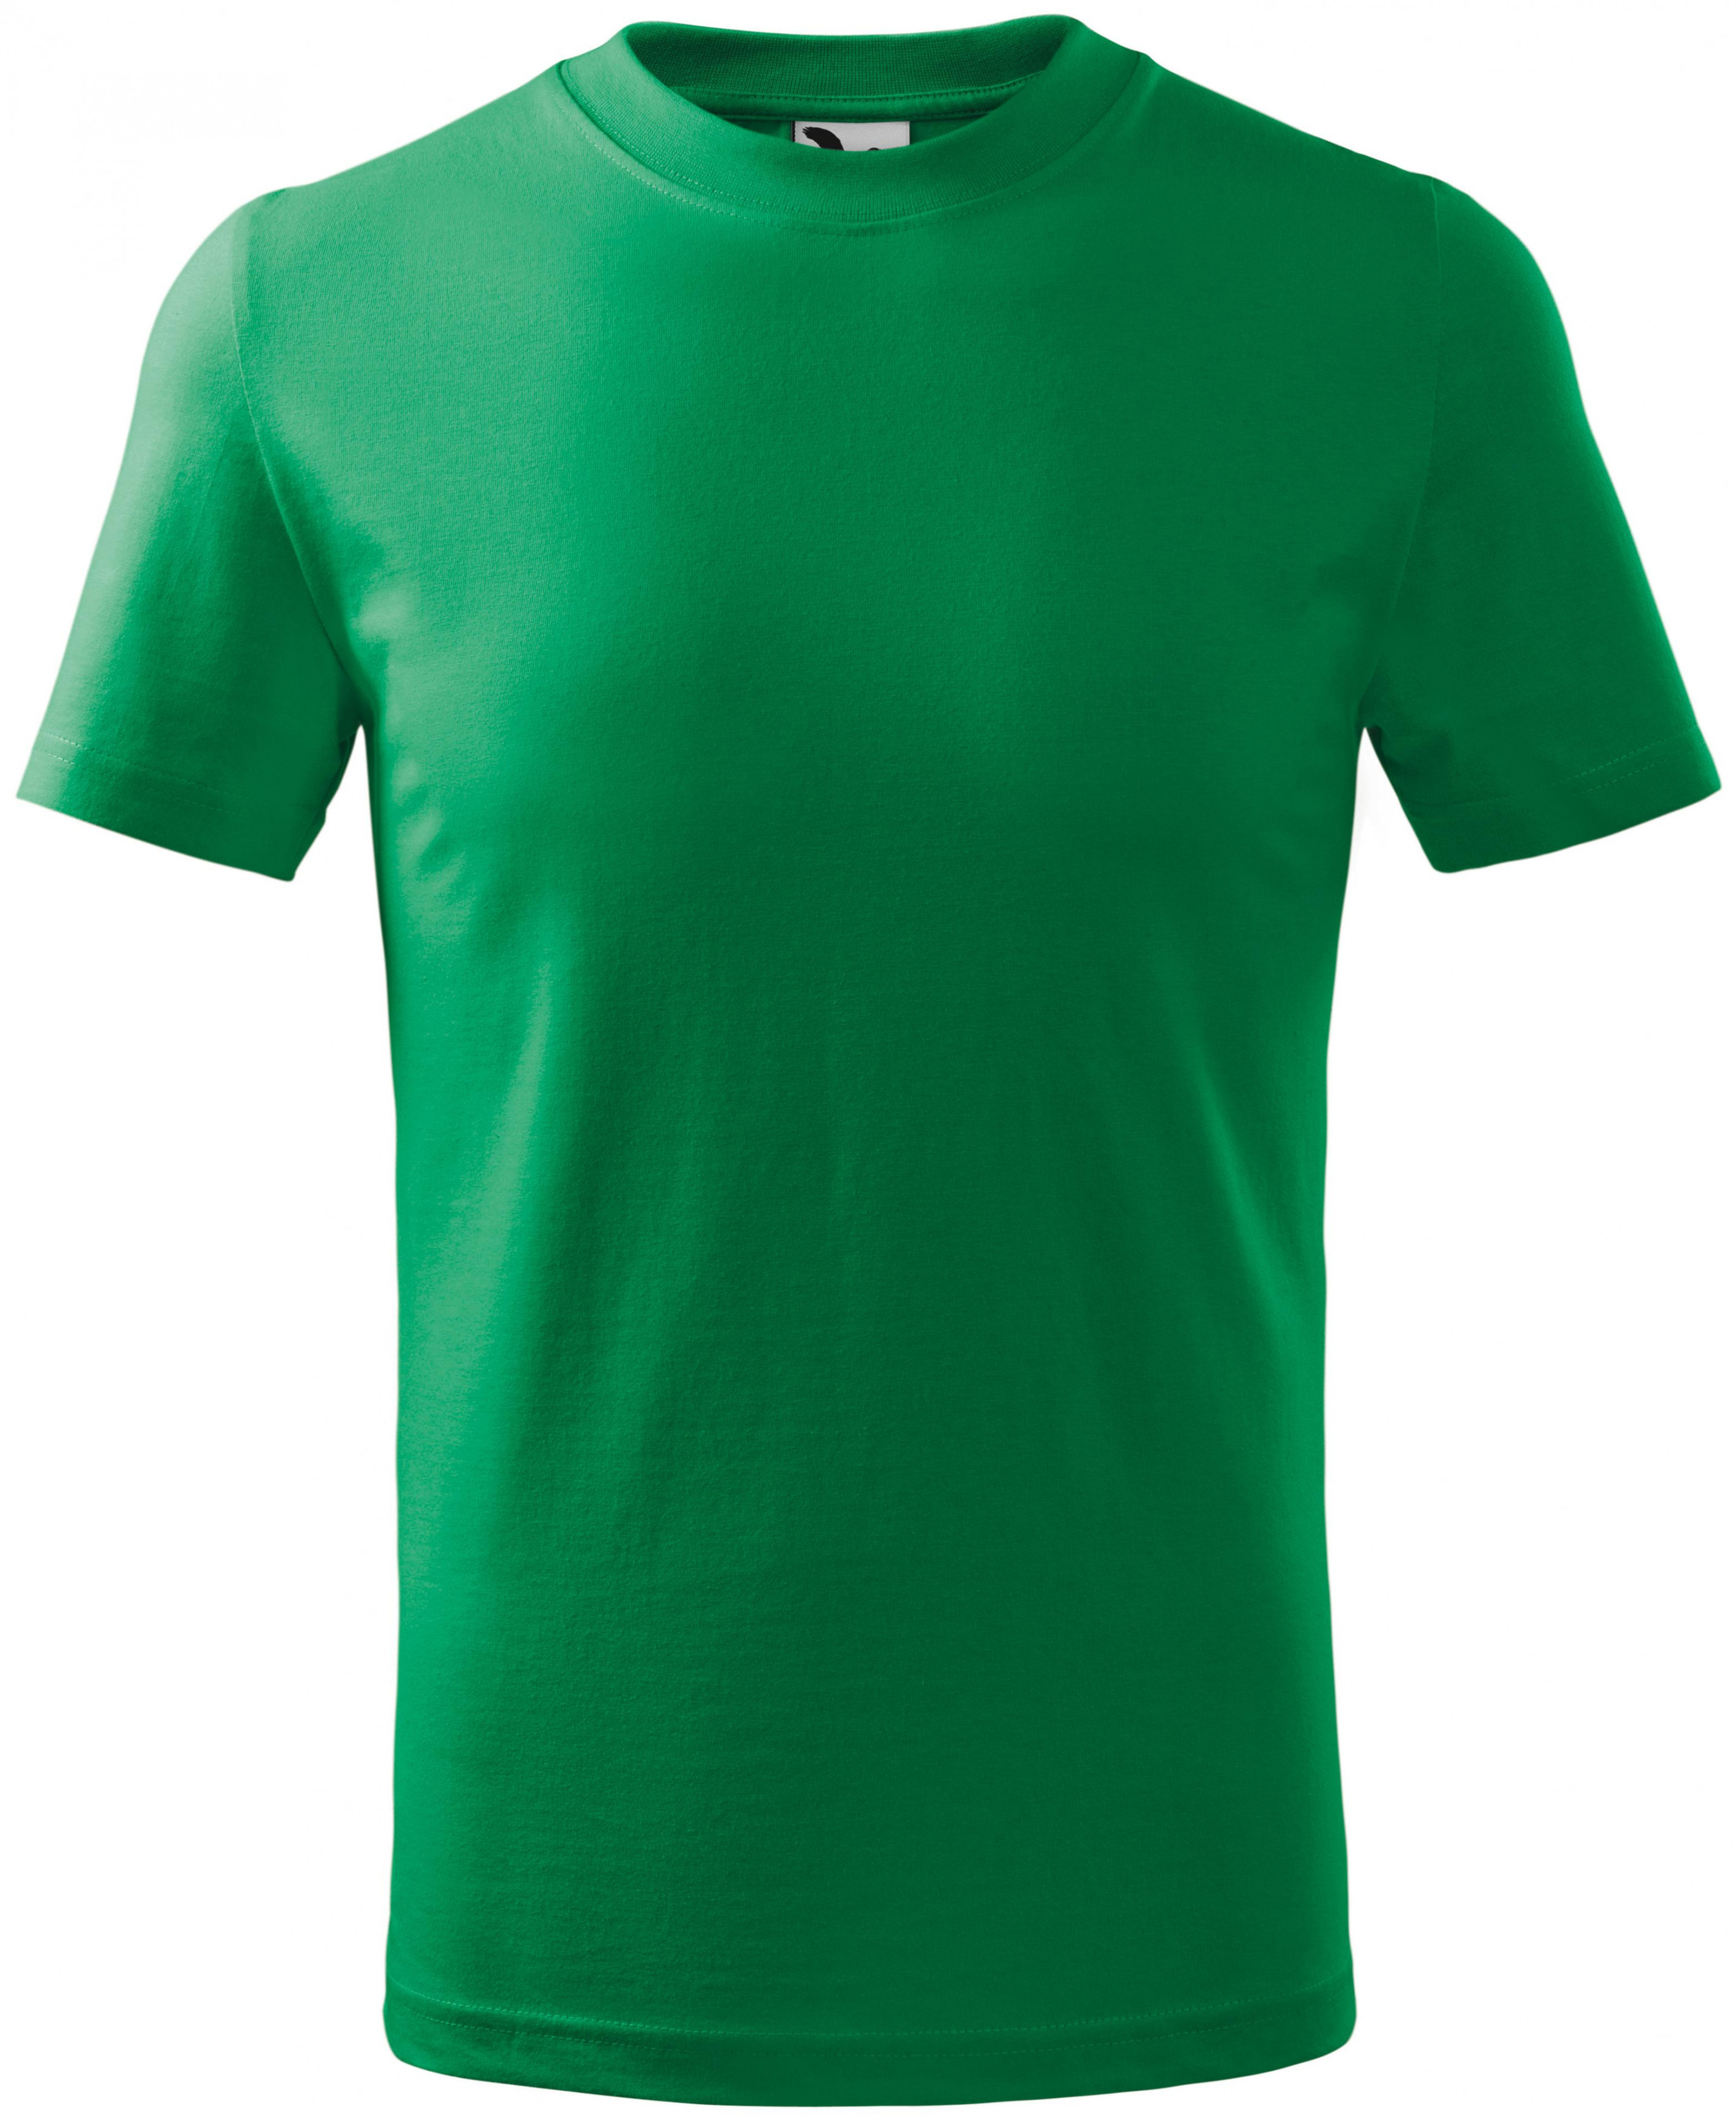 Detské tričko jednoduché, trávová zelená, 134cm / 8rokov